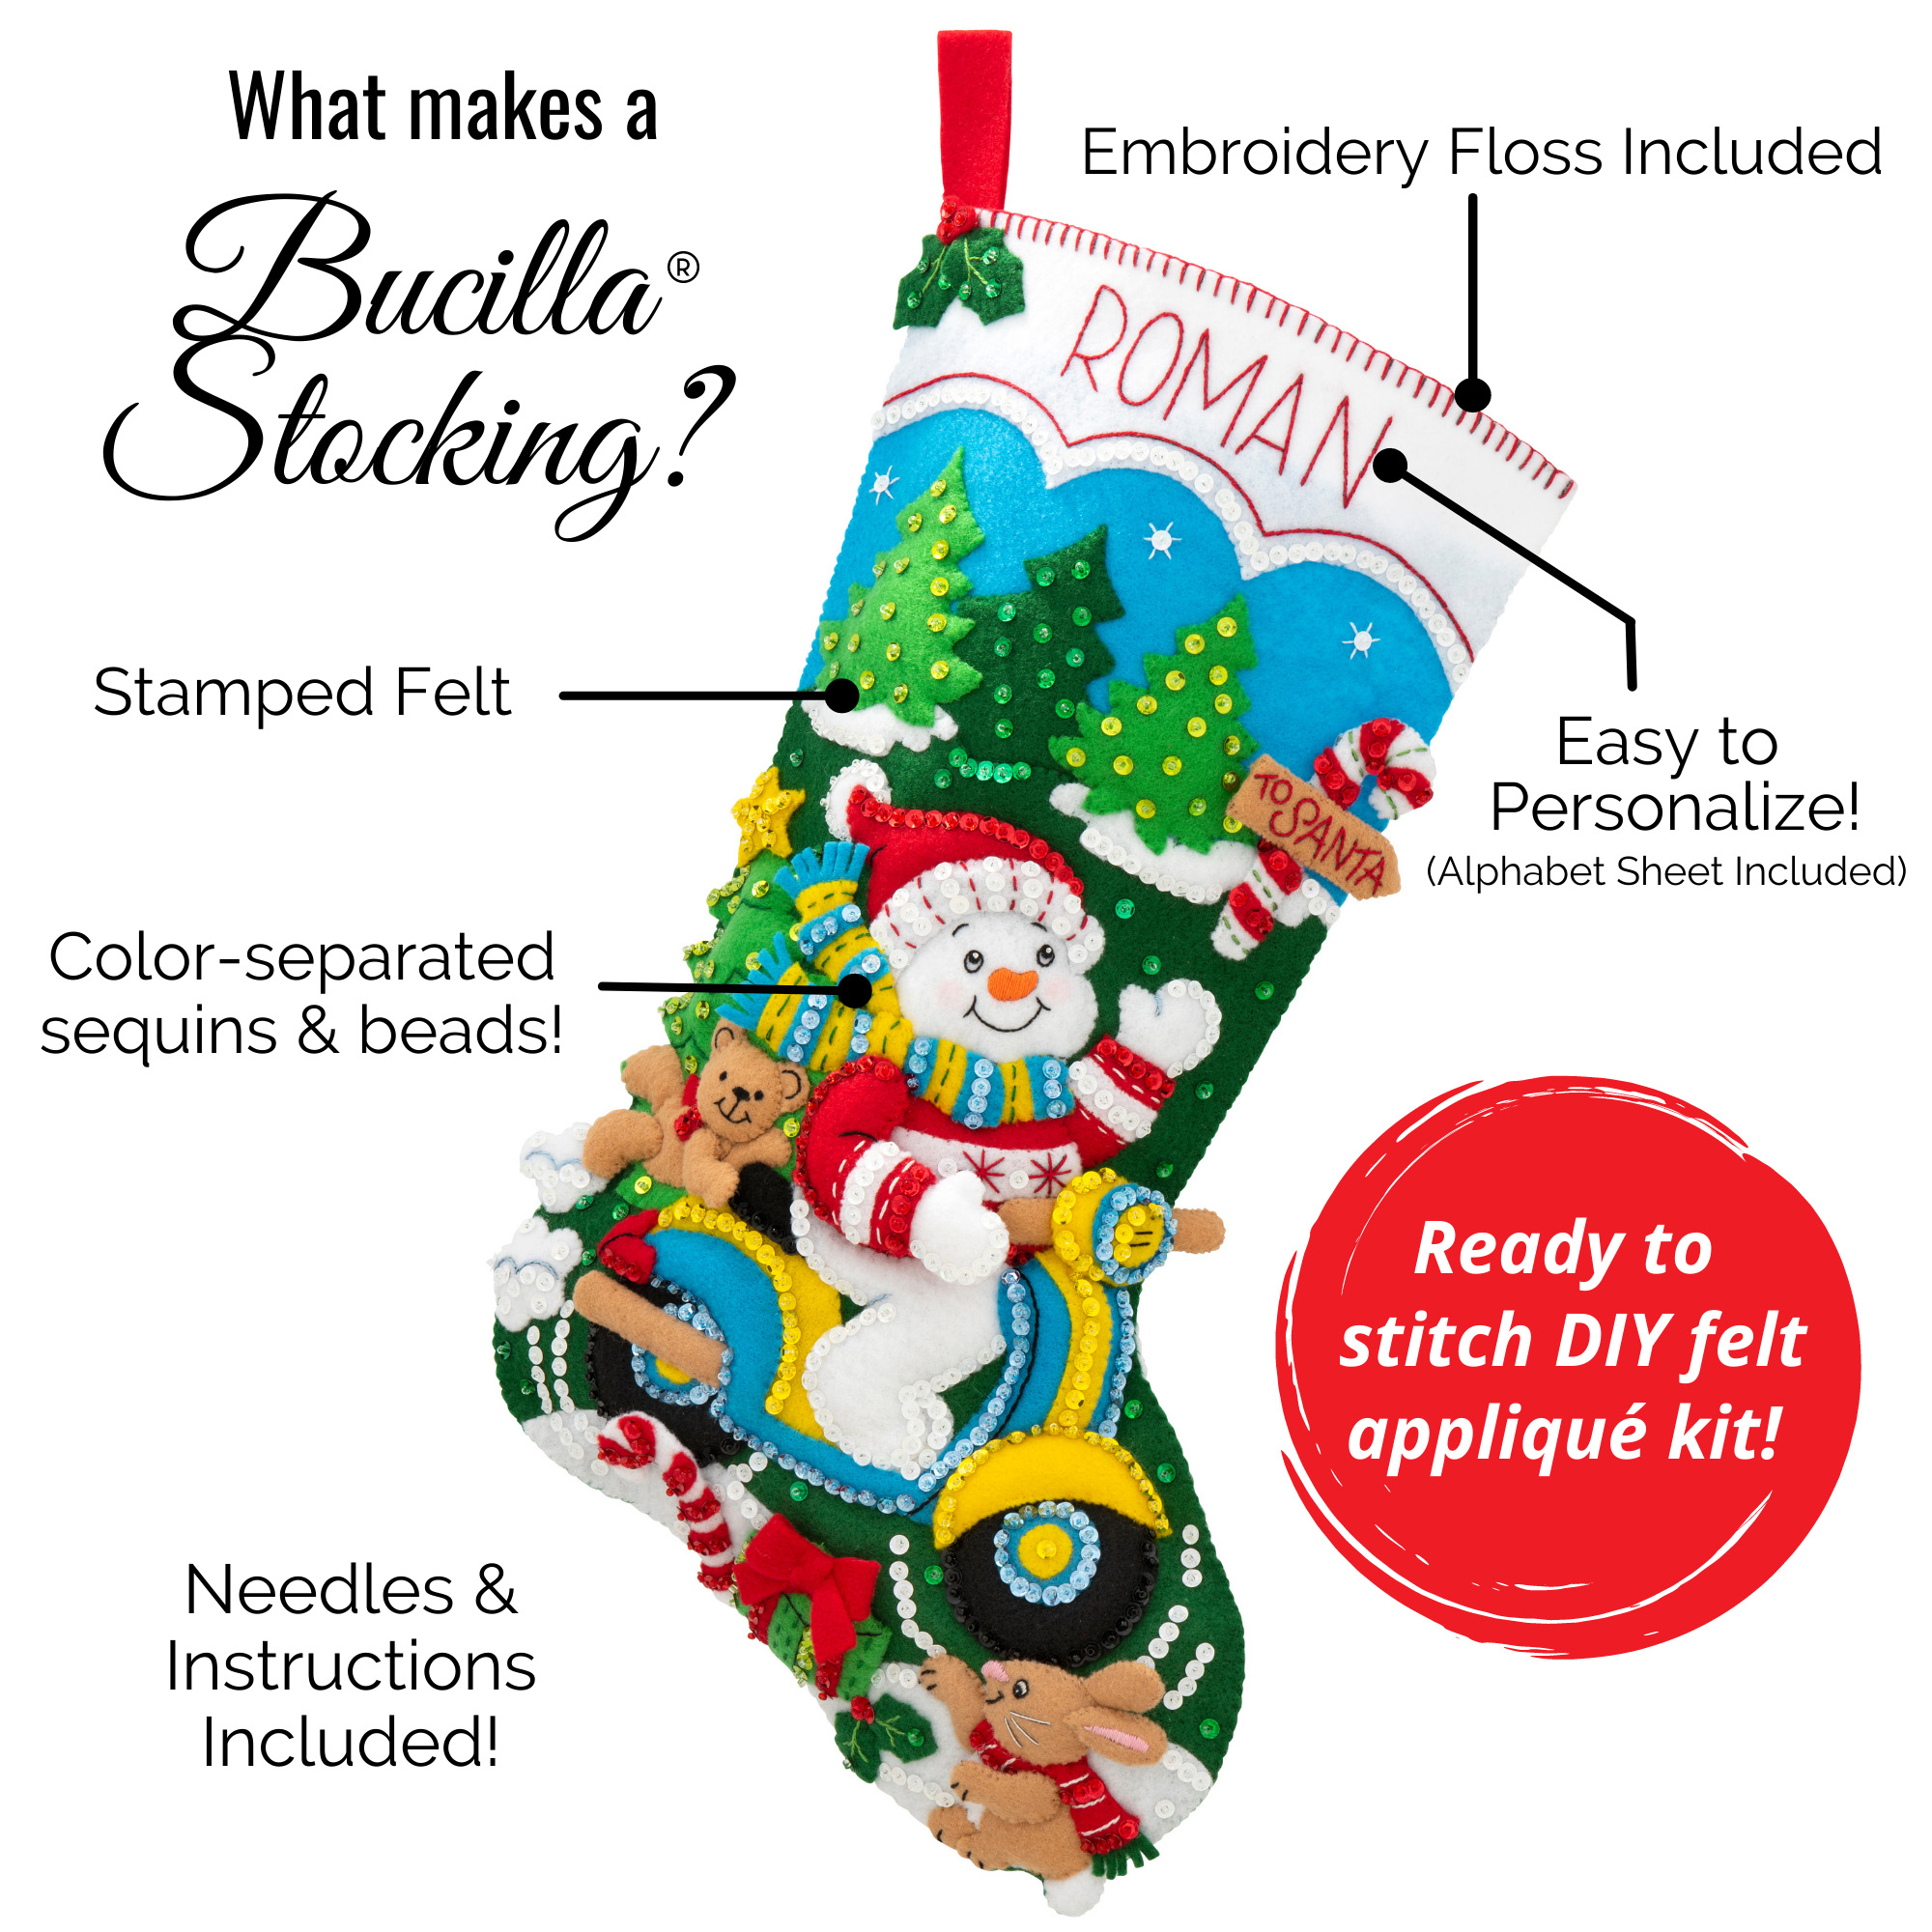 Bucilla ® Seasonal Felt Stocking Kits - Polar Bear Buddies - 89465E